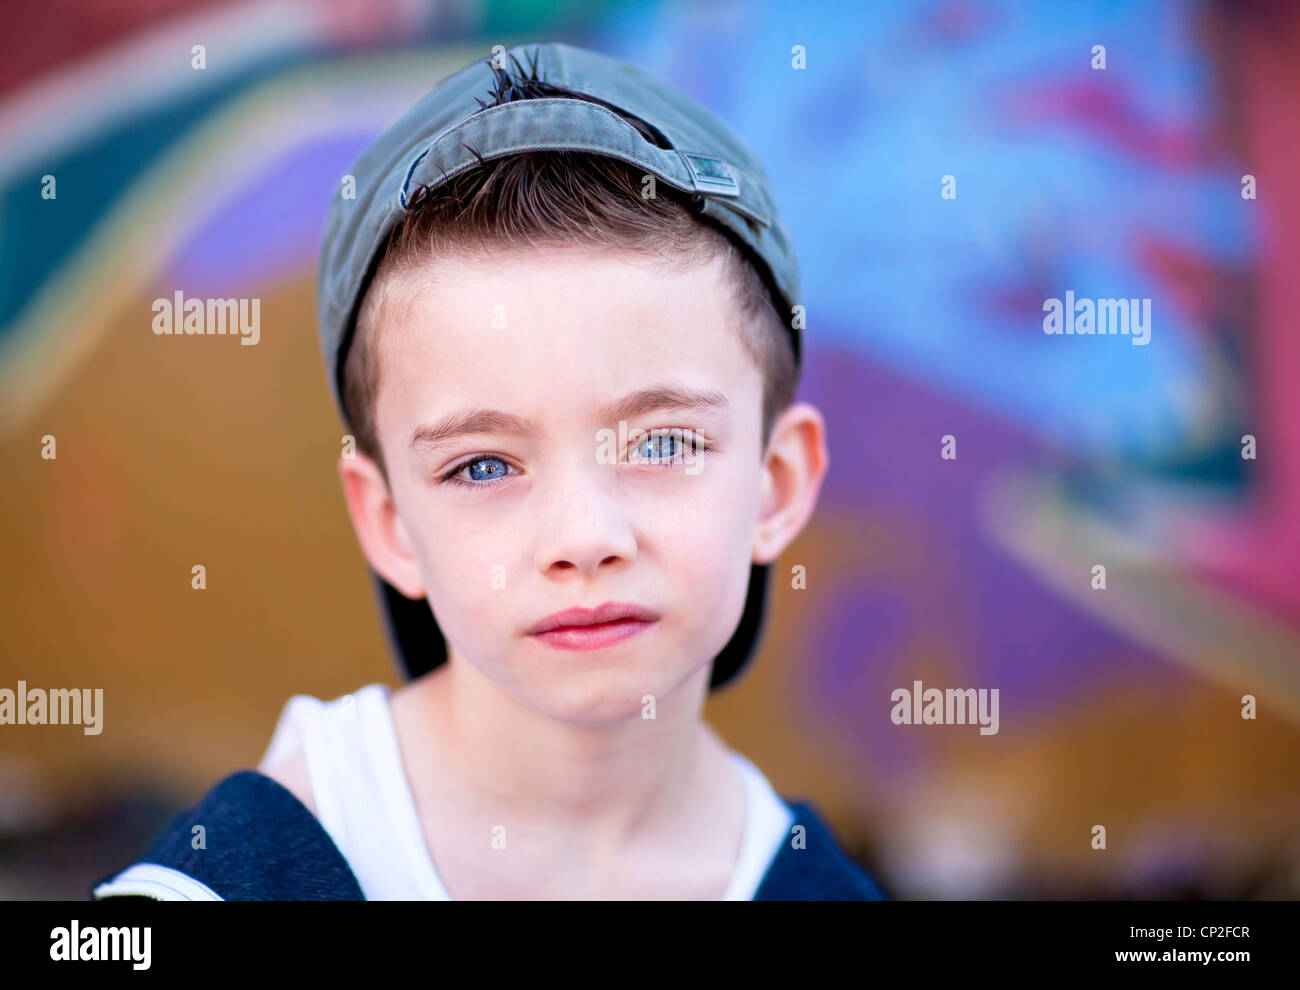 Young boy against graffiti wall Stock Photo